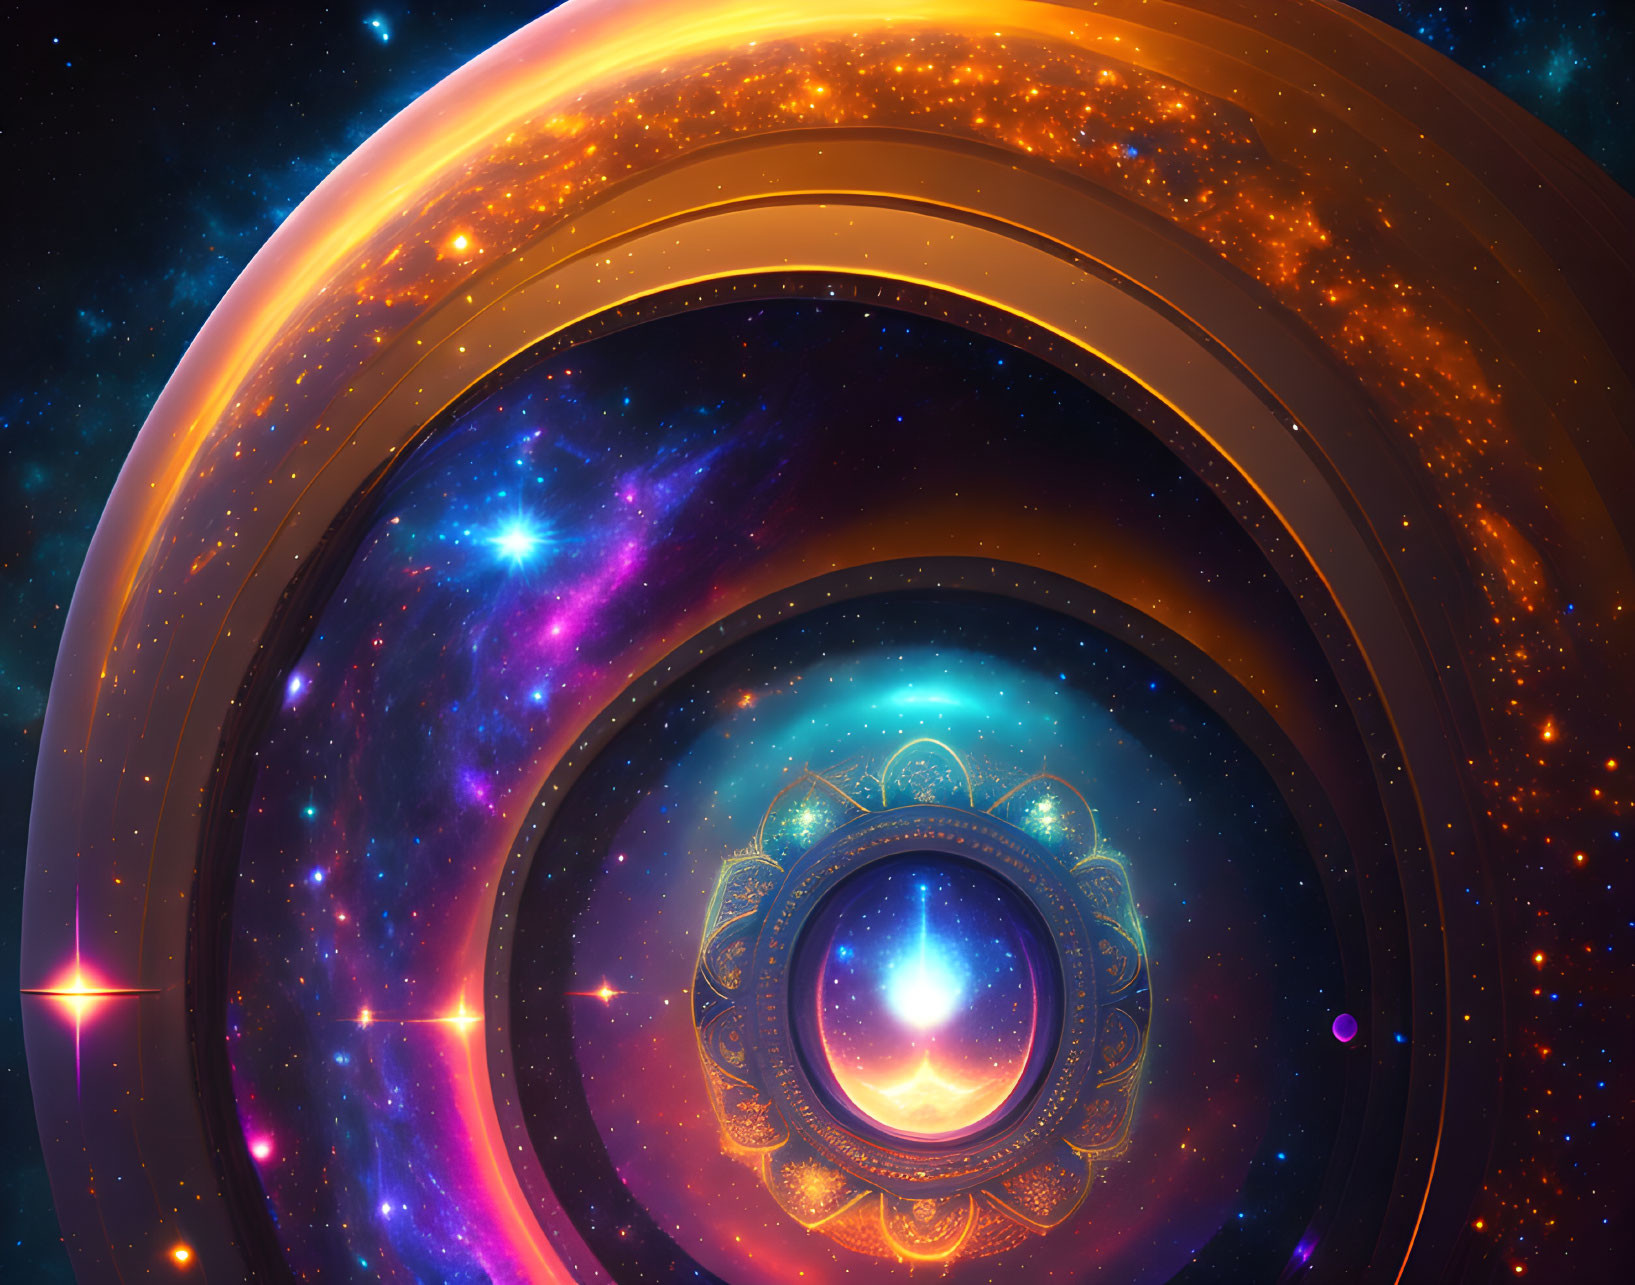 Colorful digital artwork: Cosmic mandala in fiery space.